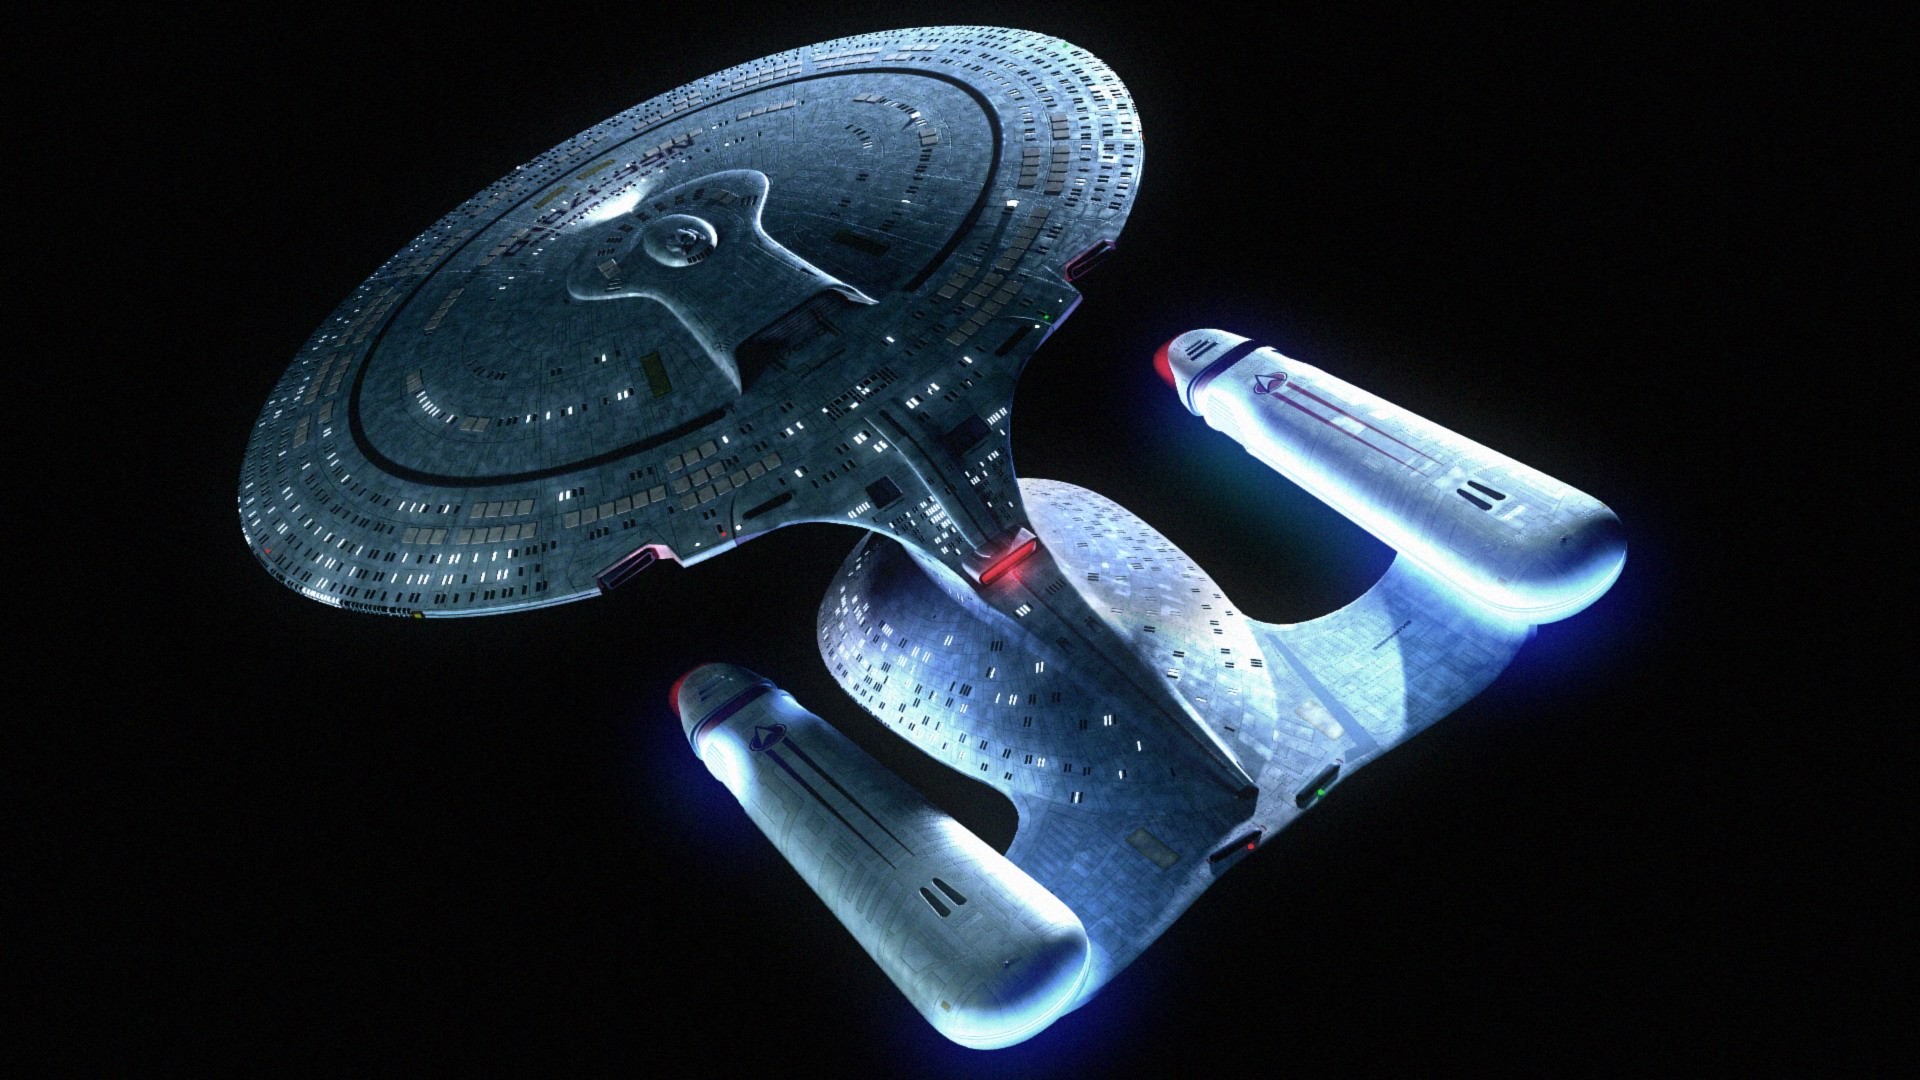 Star Trek USS Enterprise Spaceship NCC 1701 Enterprise D Spaceship Science Fiction Star Trek Ships S 1920x1080